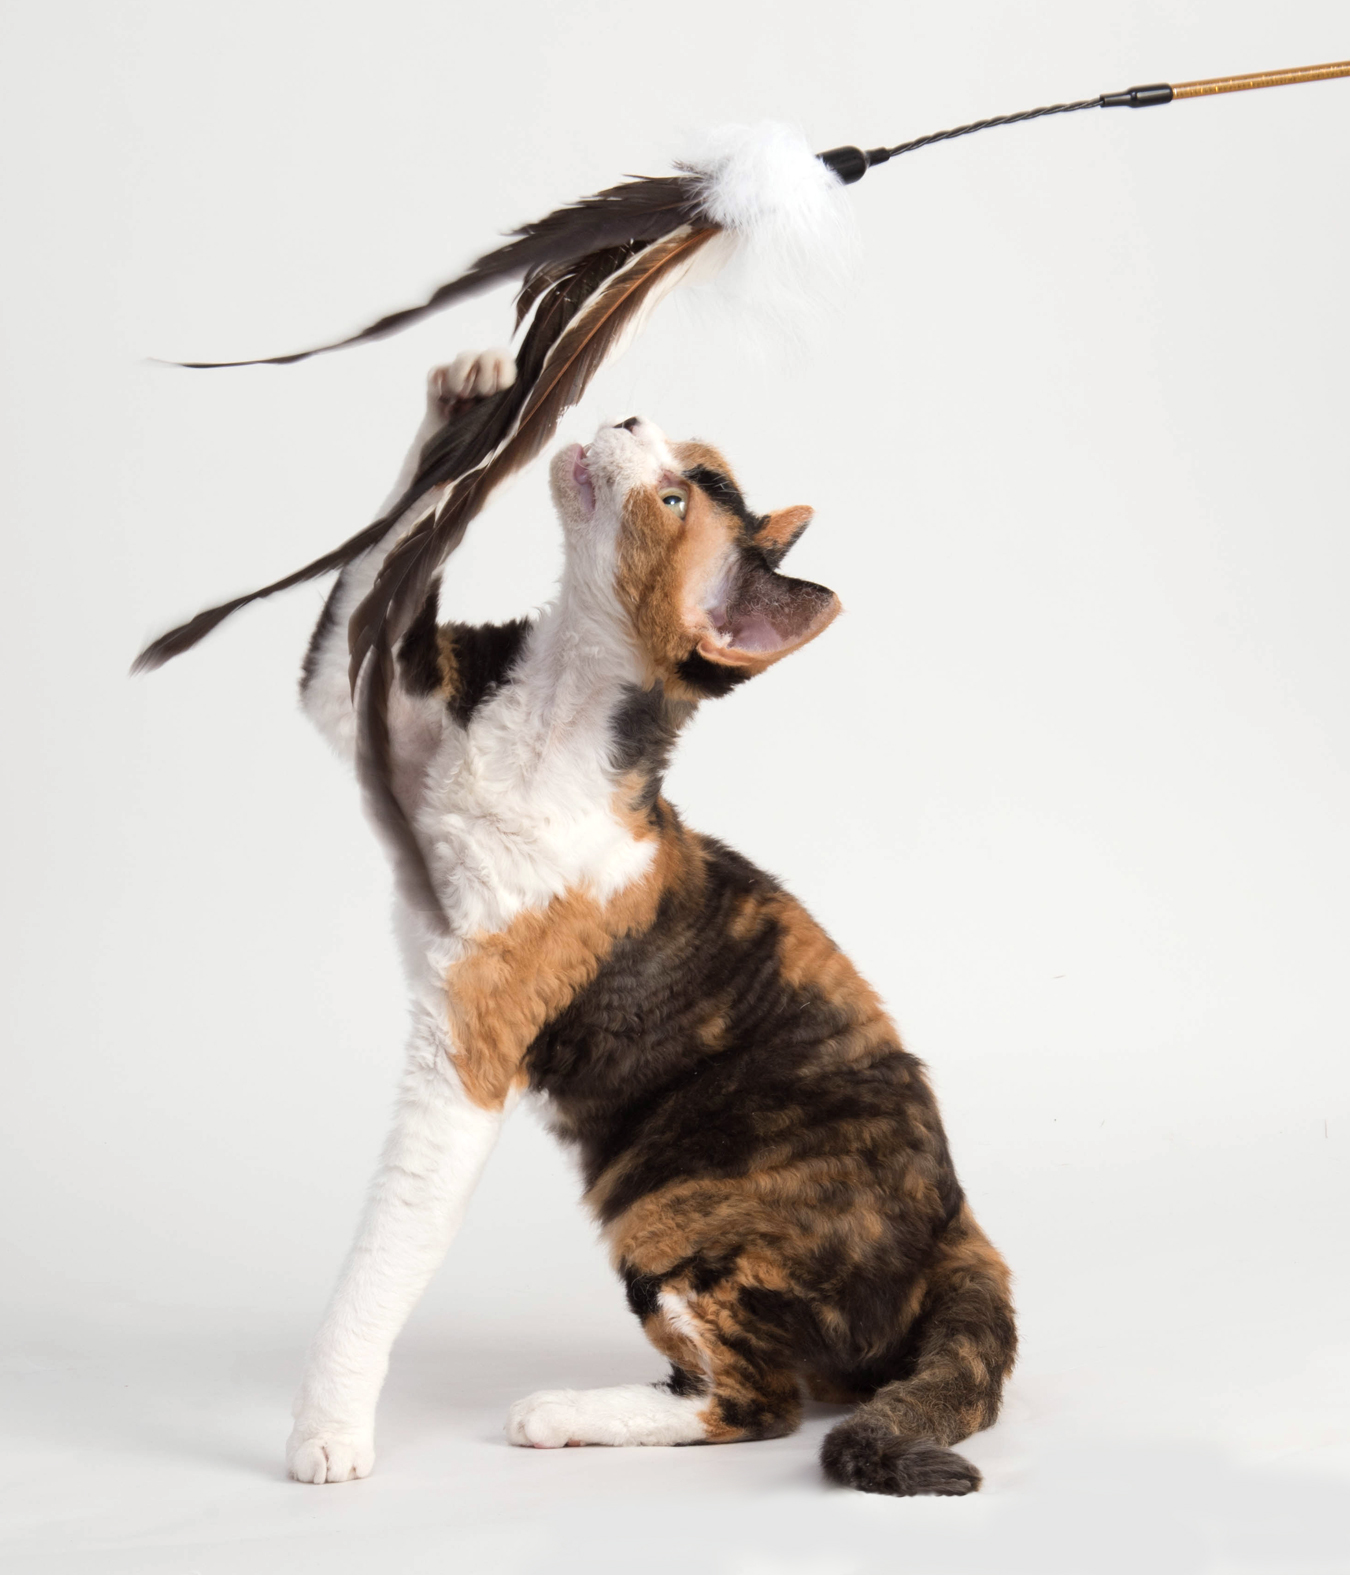 Buy Cat Wand & Teaser Toys Online From Top Pet Brands – Pet Haus